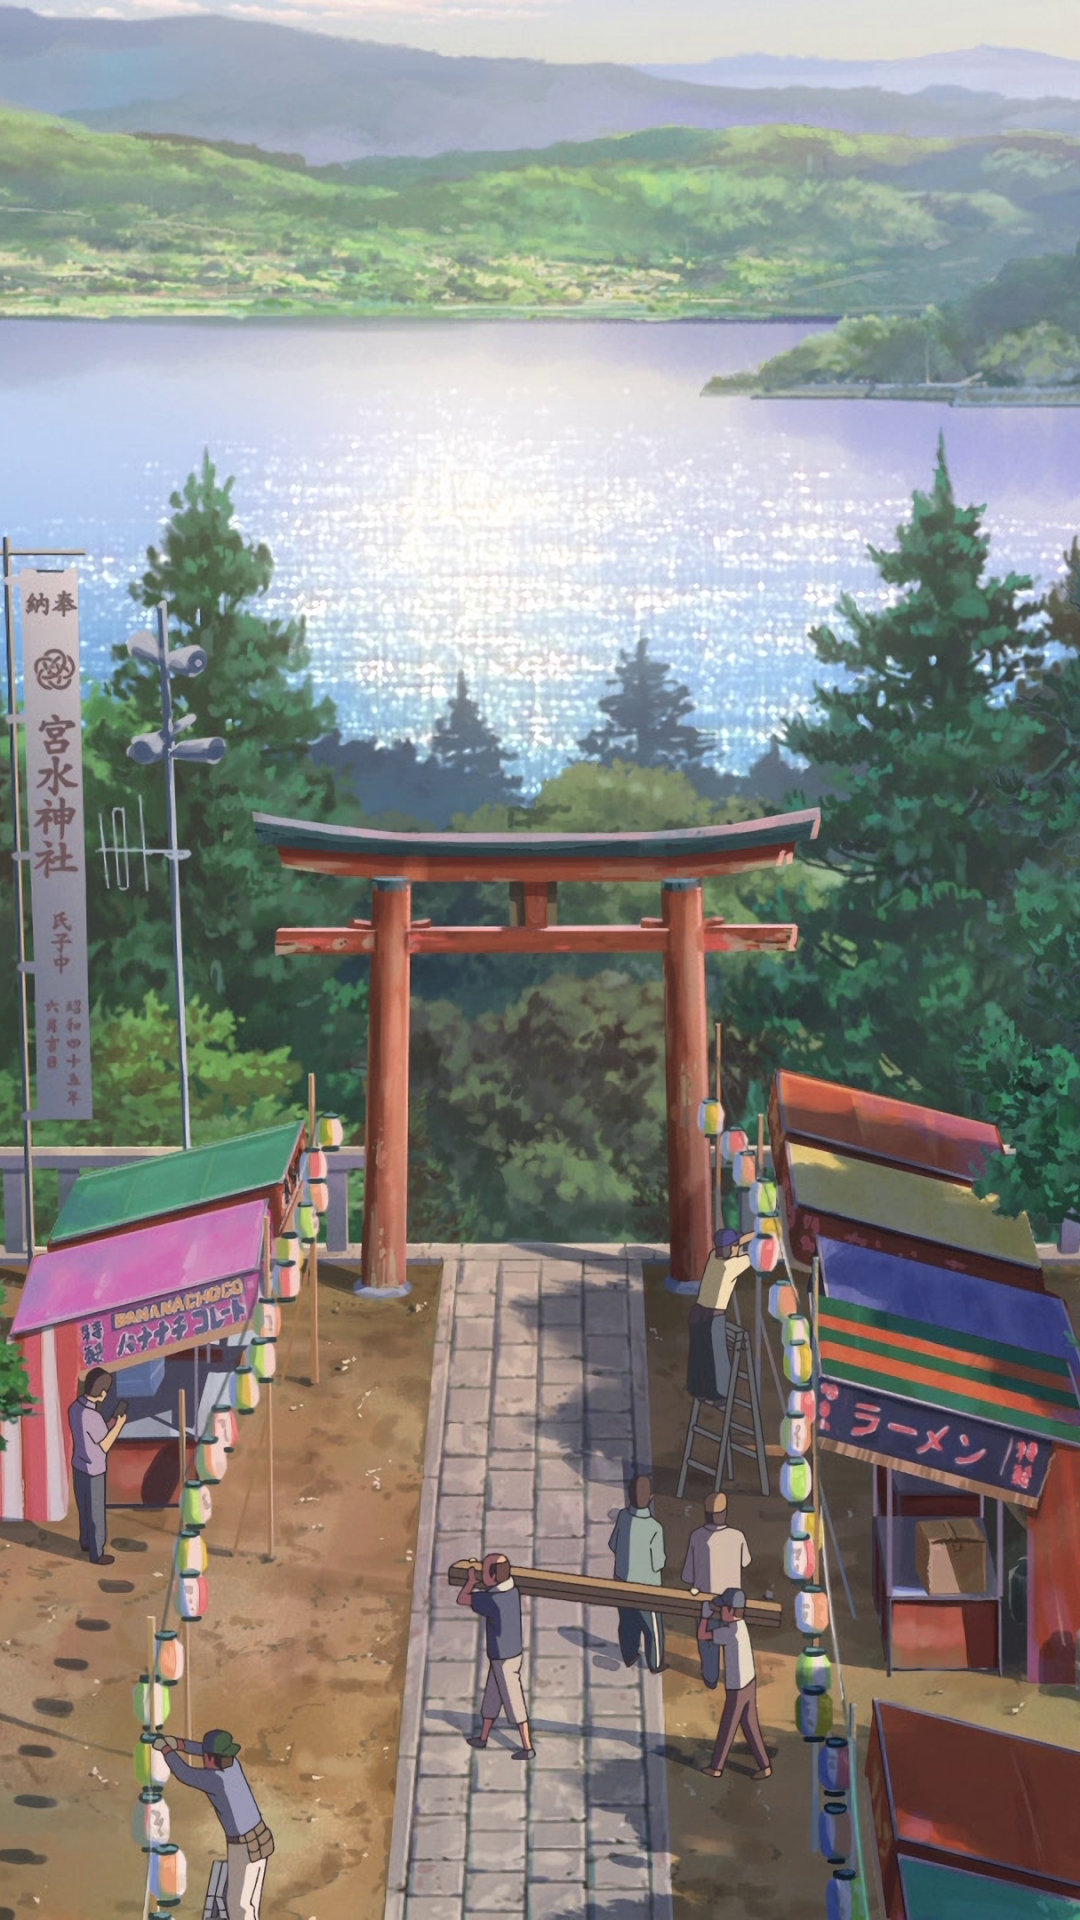 Lake and Mountain Anime Background by idonlikedesigngrafic on DeviantArt